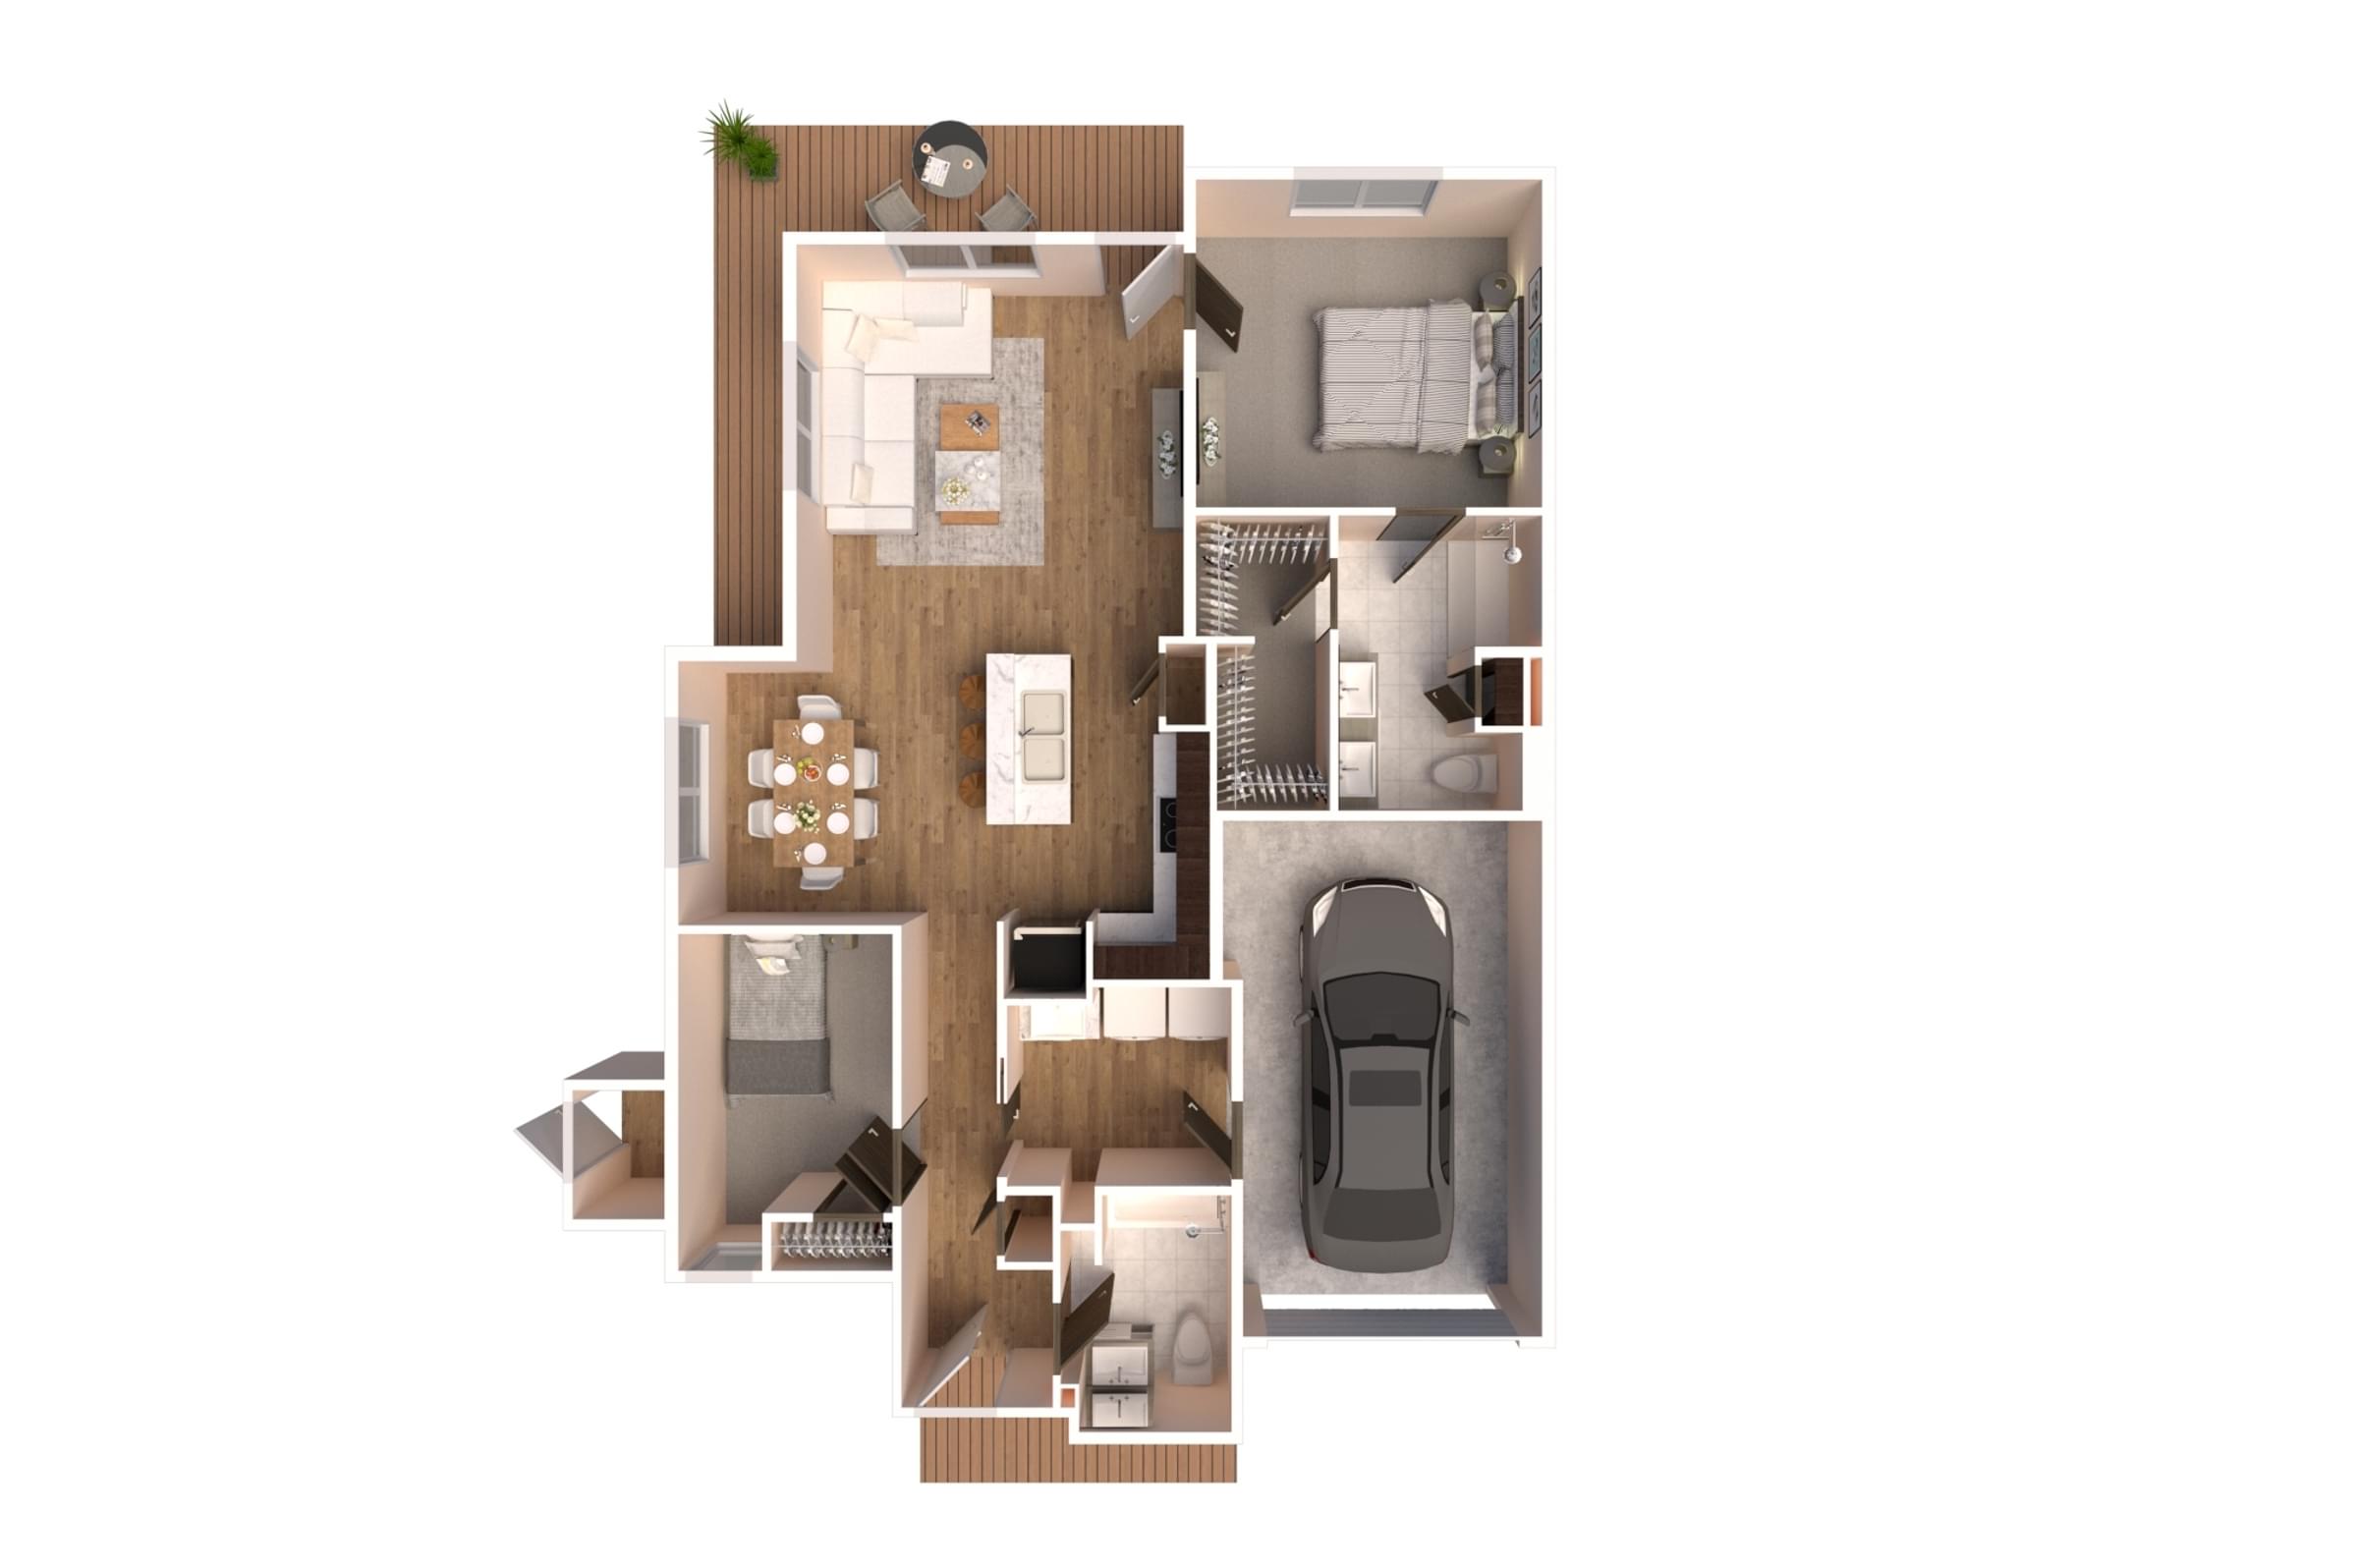 The Preserve at Meridian senior living community two-bedroom floor plan